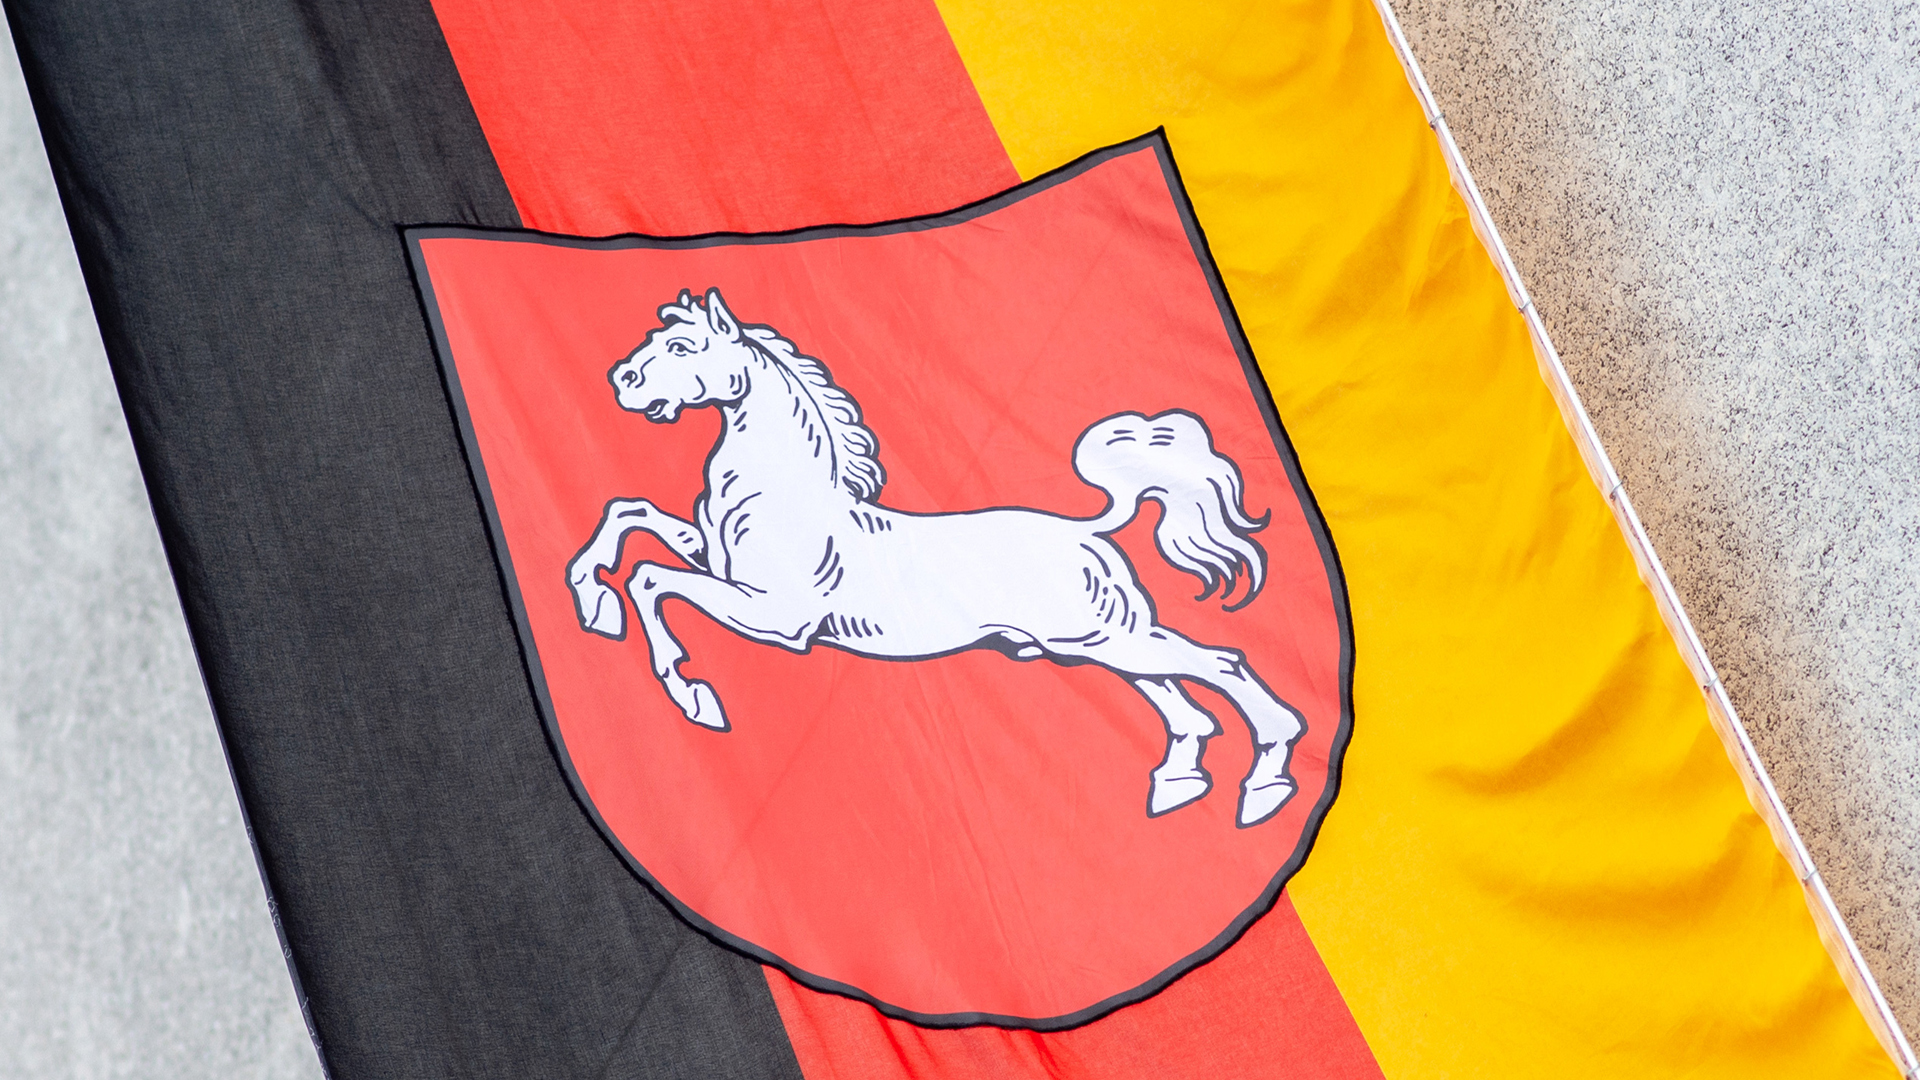 Fahne des Bundeslands Niedersachsen | picture alliance / dpa